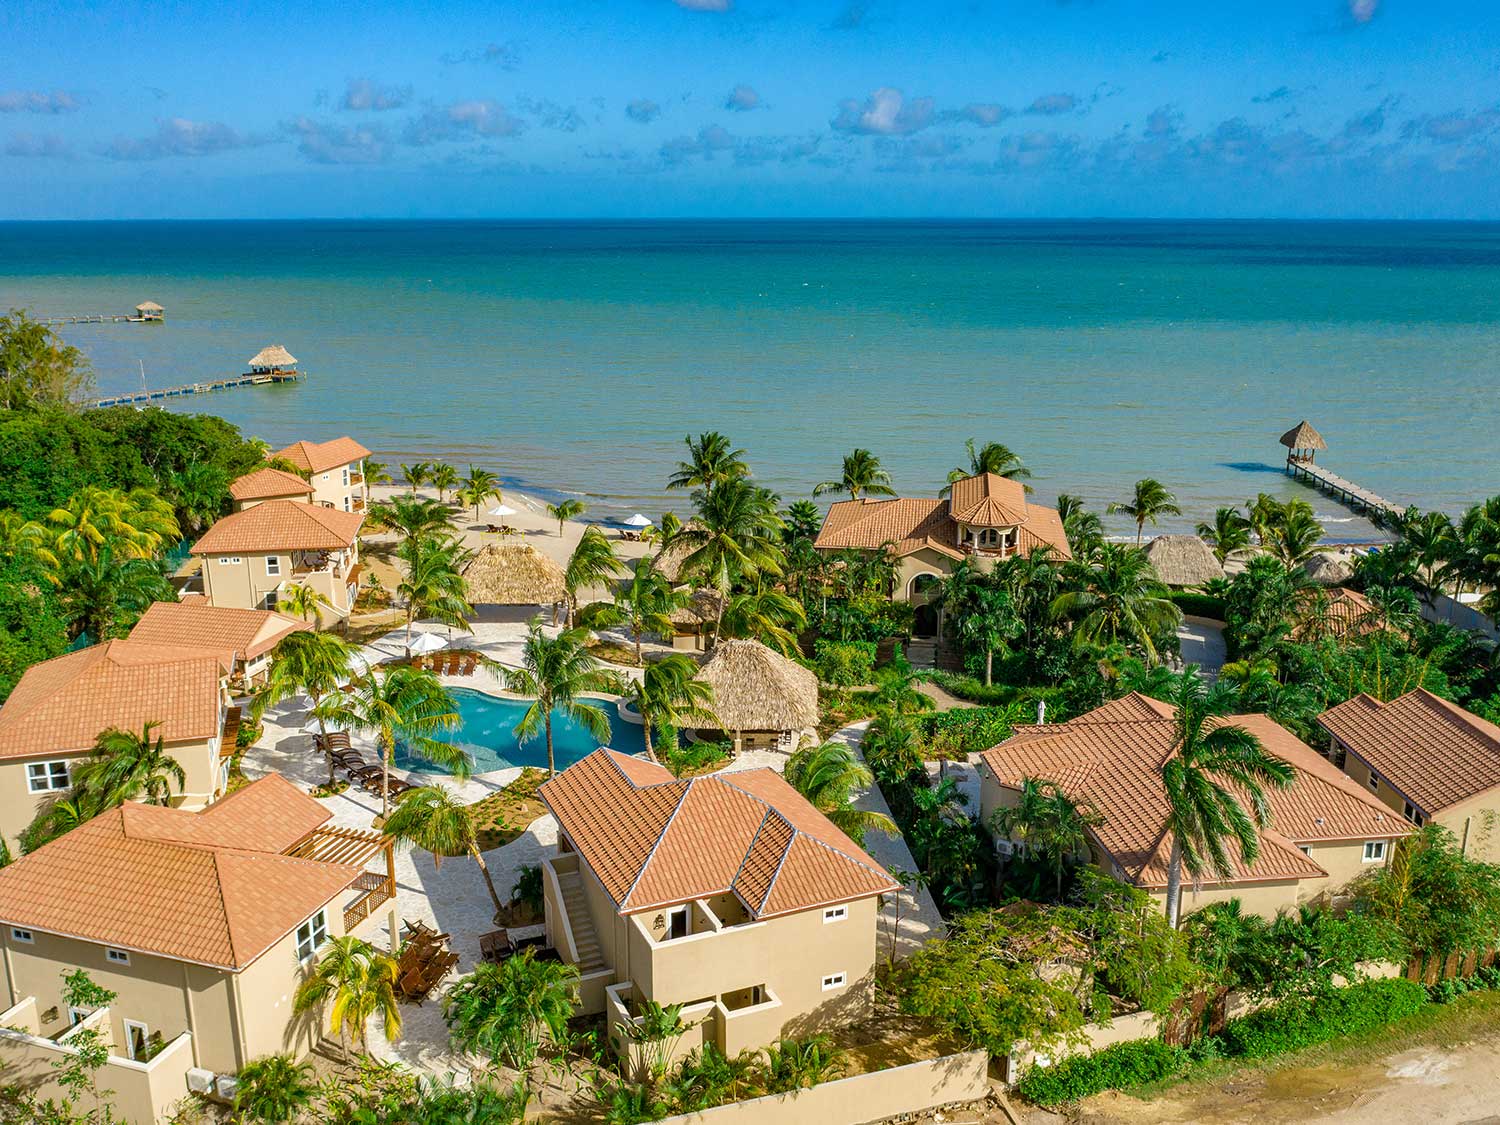 An aerial view of an island beach resort and villa.